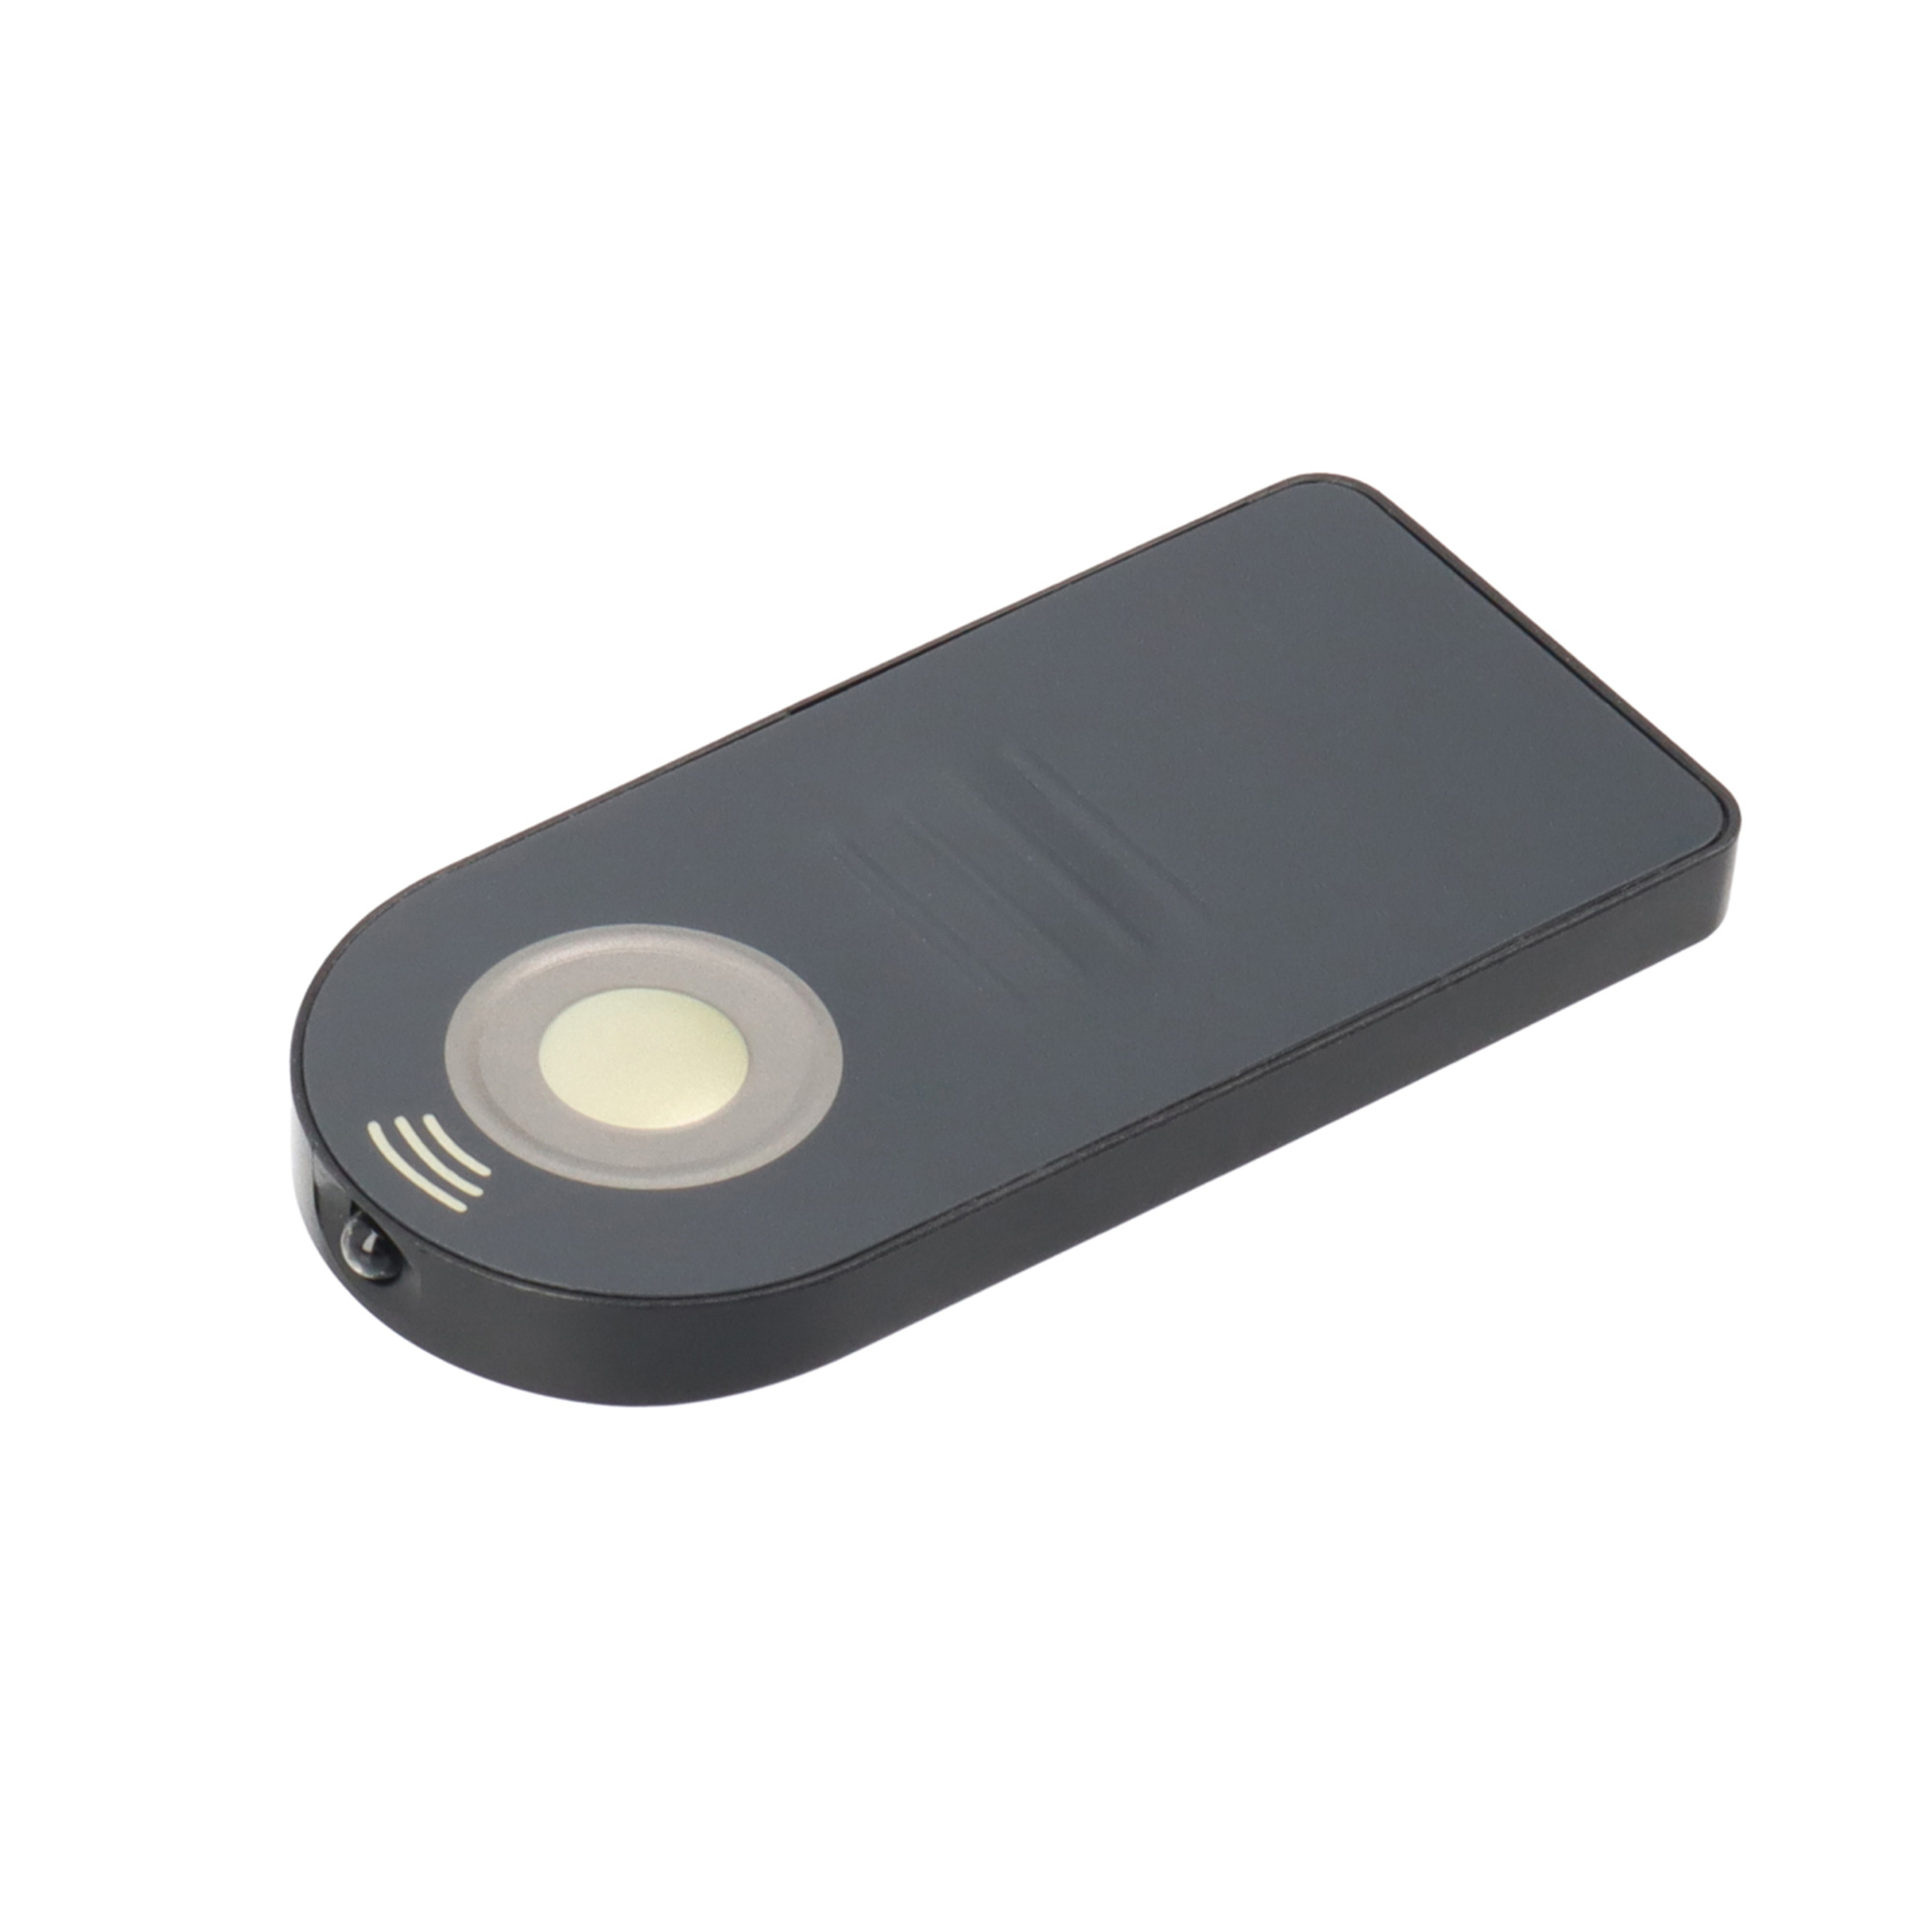 AYEX Infrarot Fernauslöser Mini IR Fernbedienung Infrarot Fernauslöser, für Black Kameras, Nikon